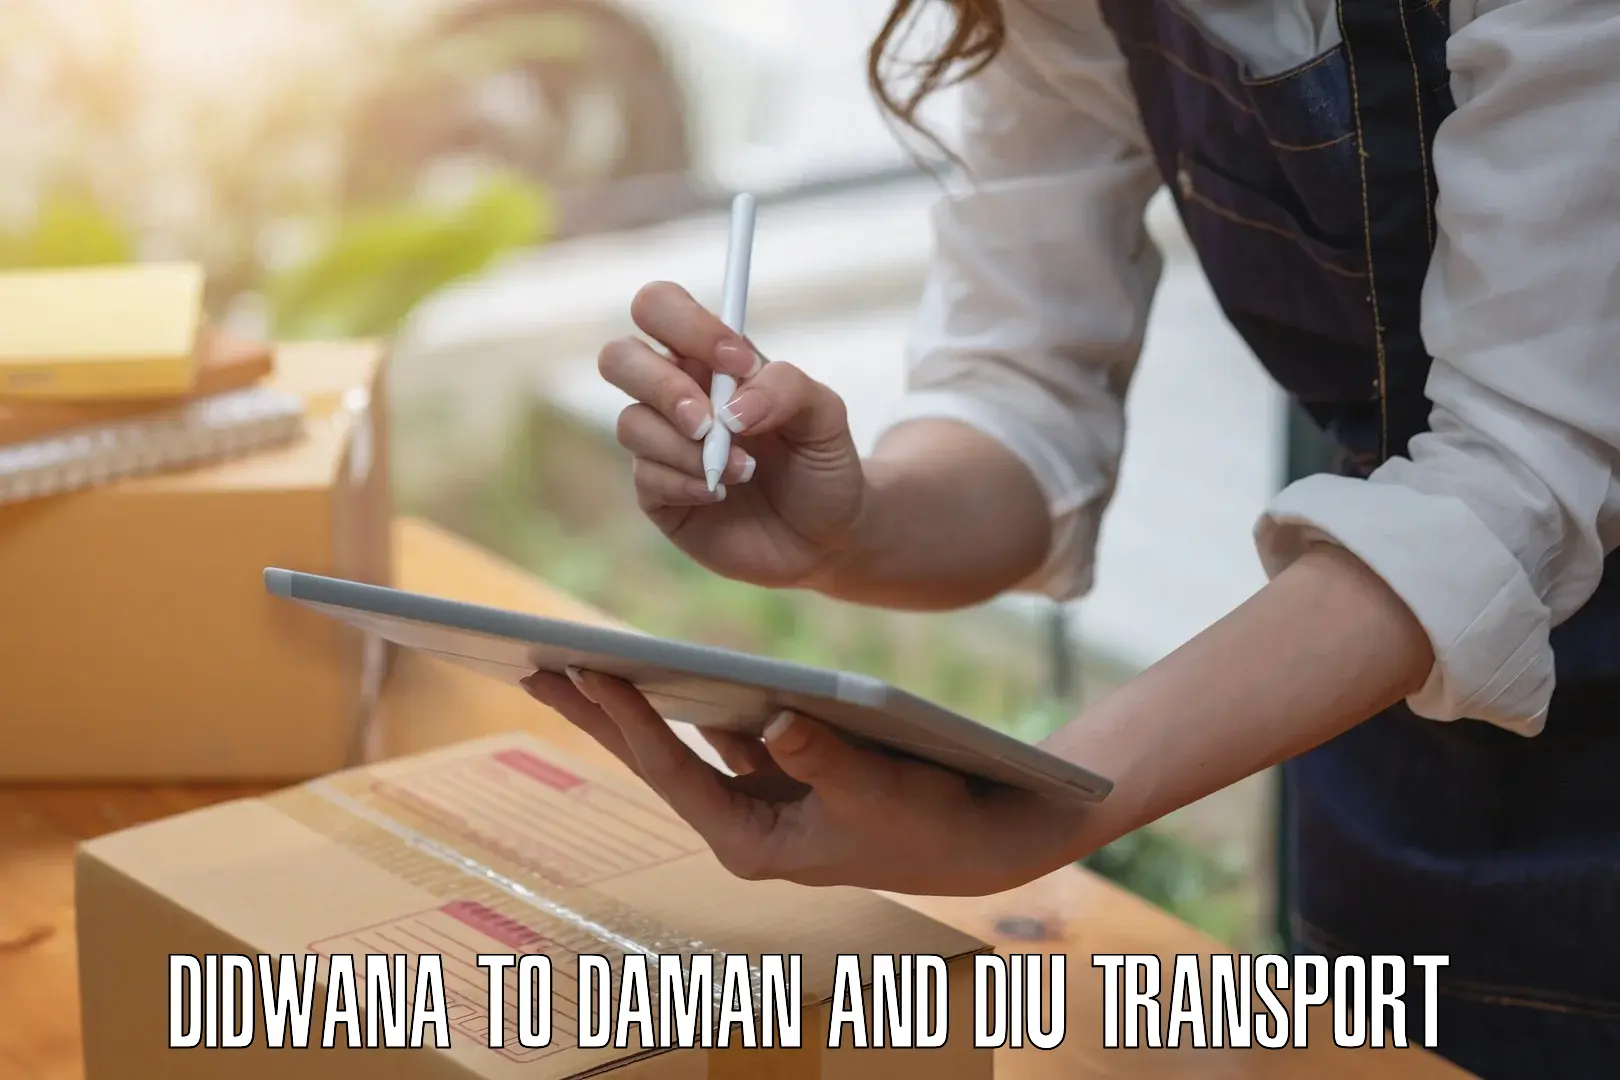 Pick up transport service Didwana to Daman